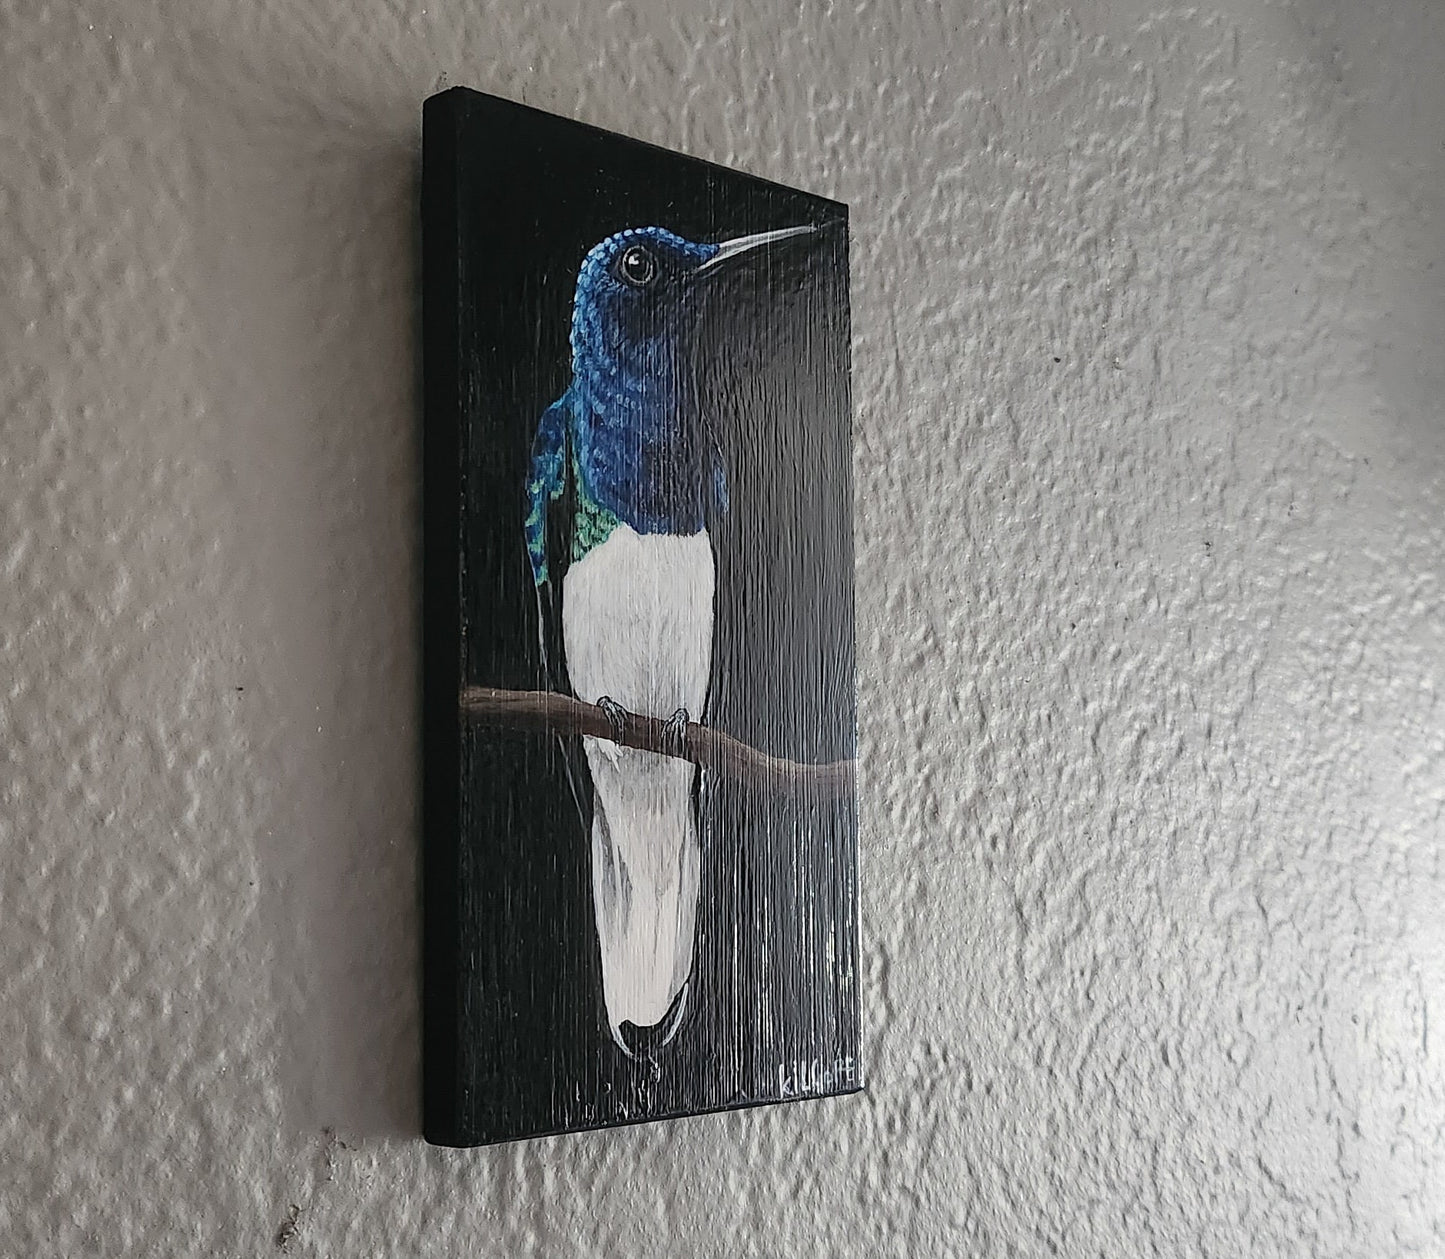 White Necked Jacobin Hummingbird - Original Acrylic Painting on Bamboo - By Kilgore, Original 3.5" x 6" Acrylic Painting | Hummingbird Art